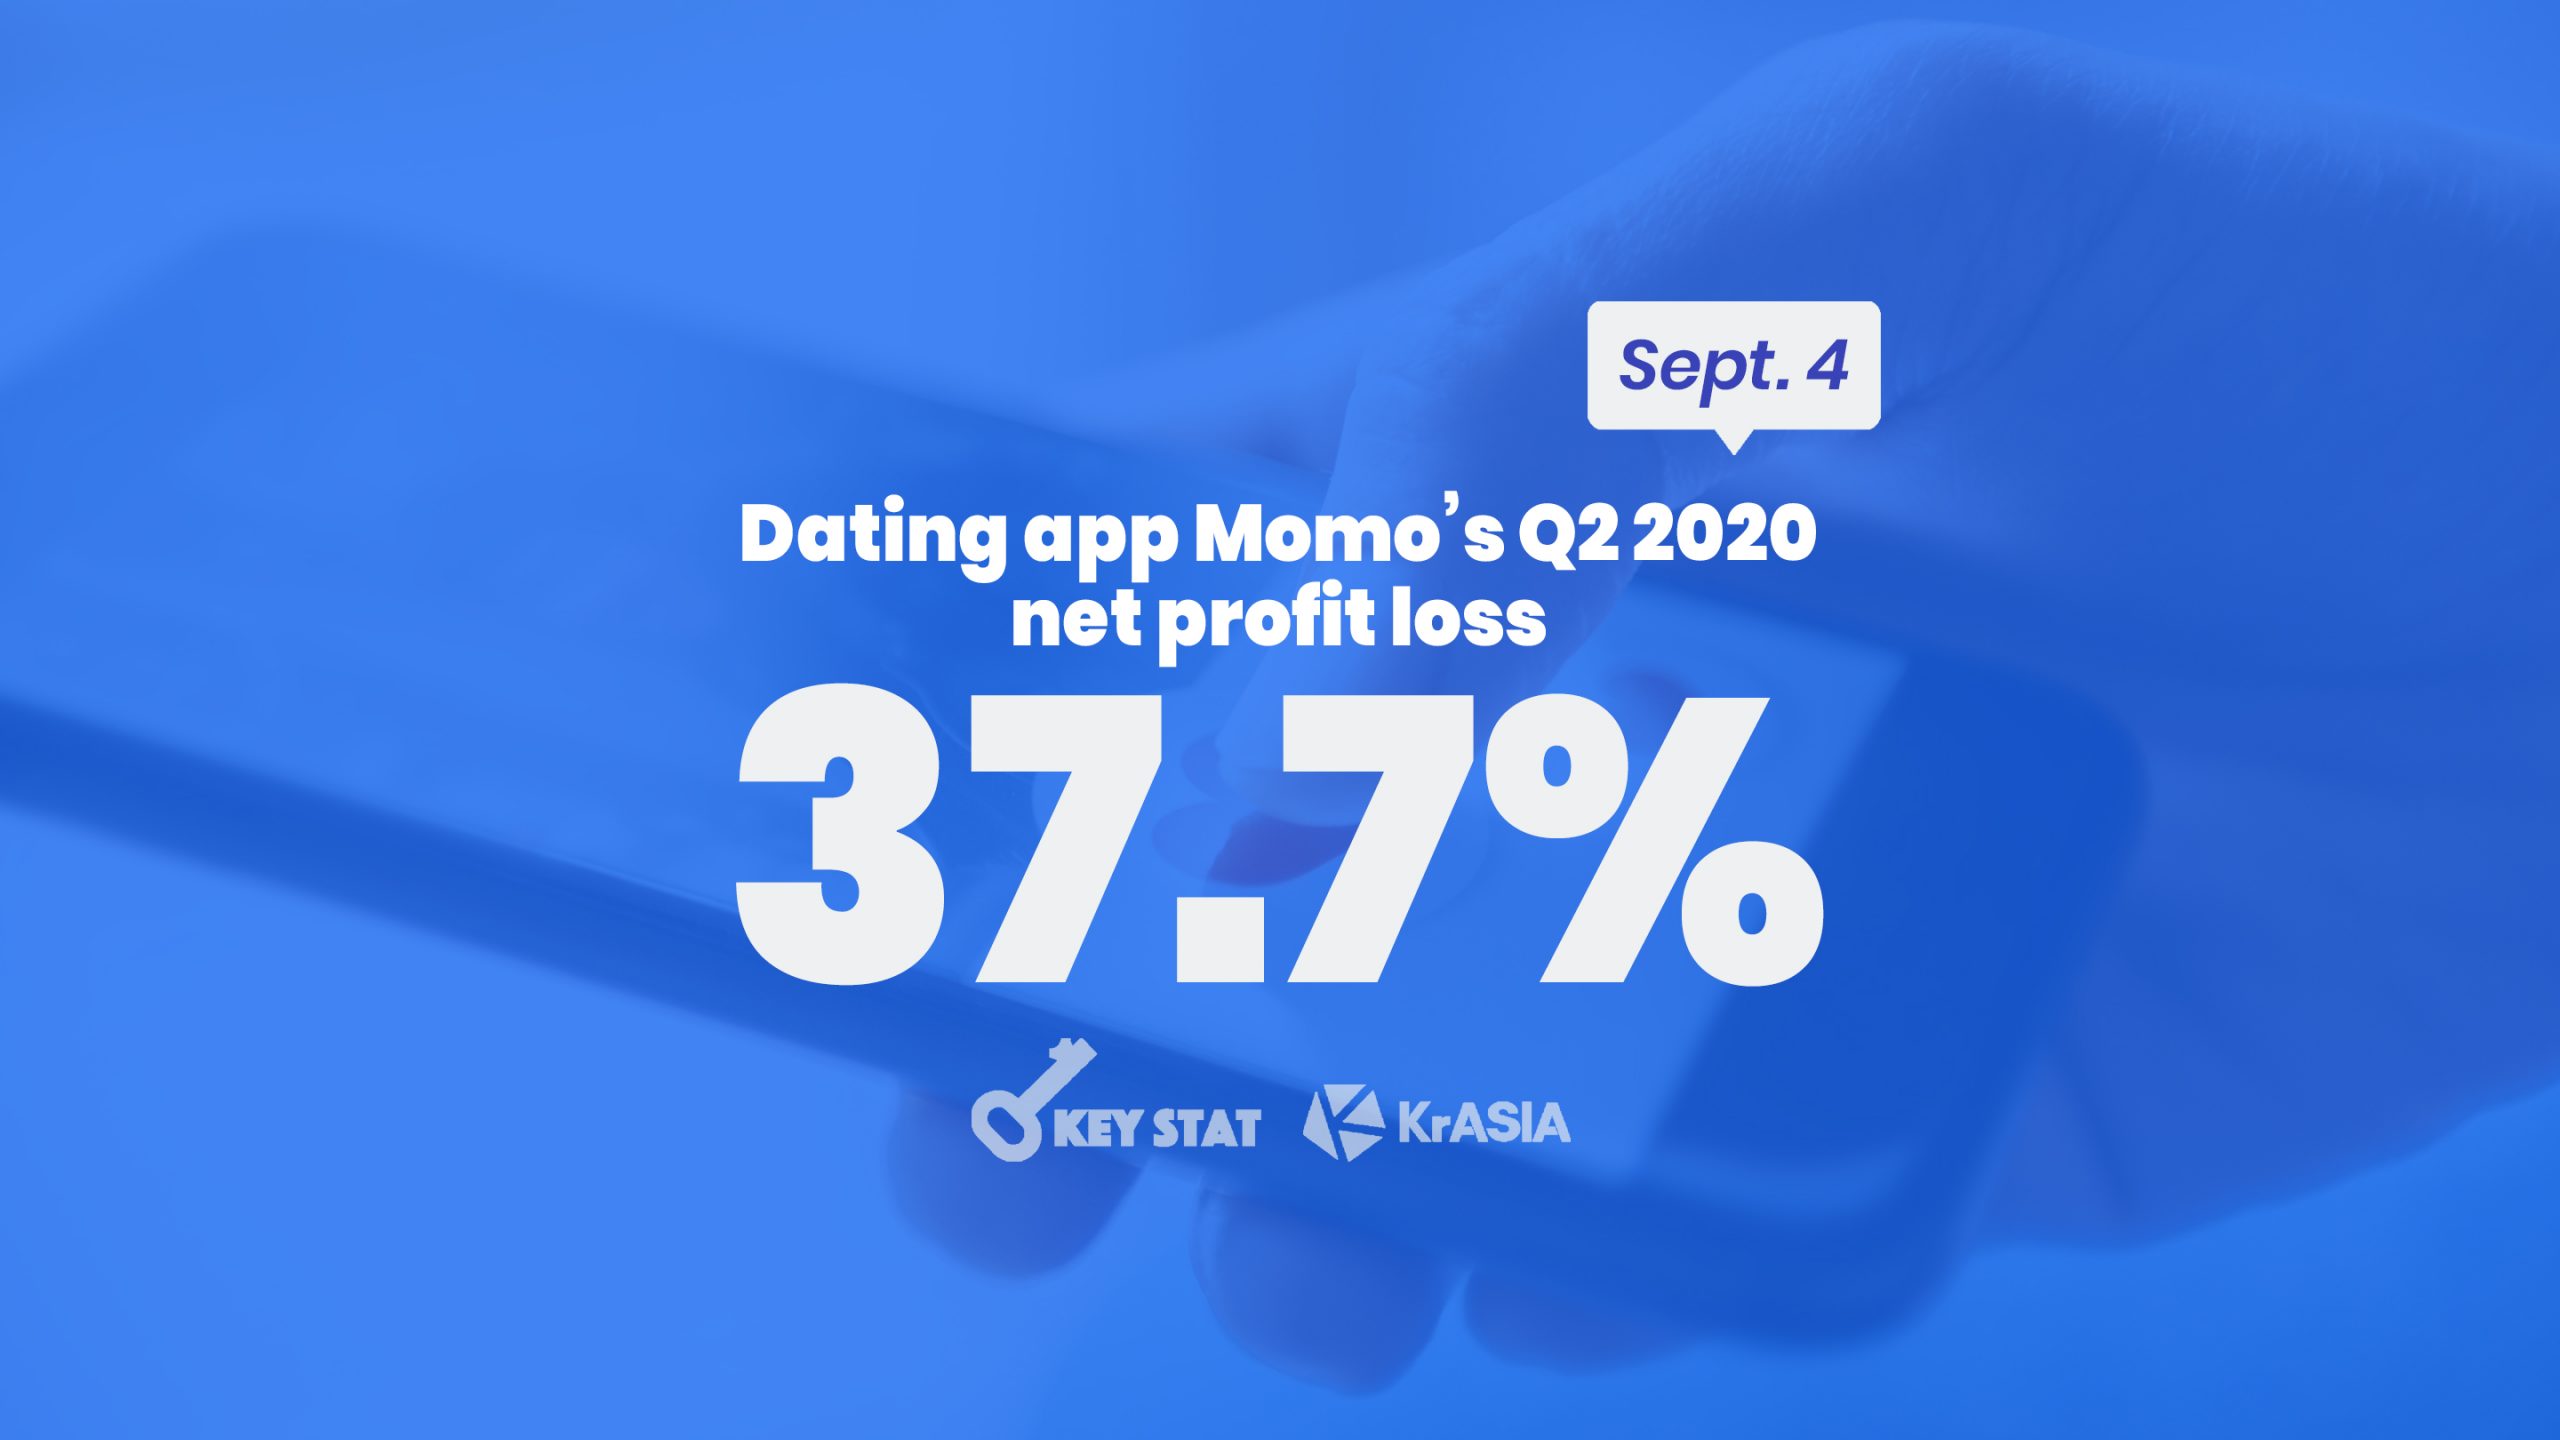 KEY STAT | China’s Tinder Momo reports unsatisfying Q2 earnings